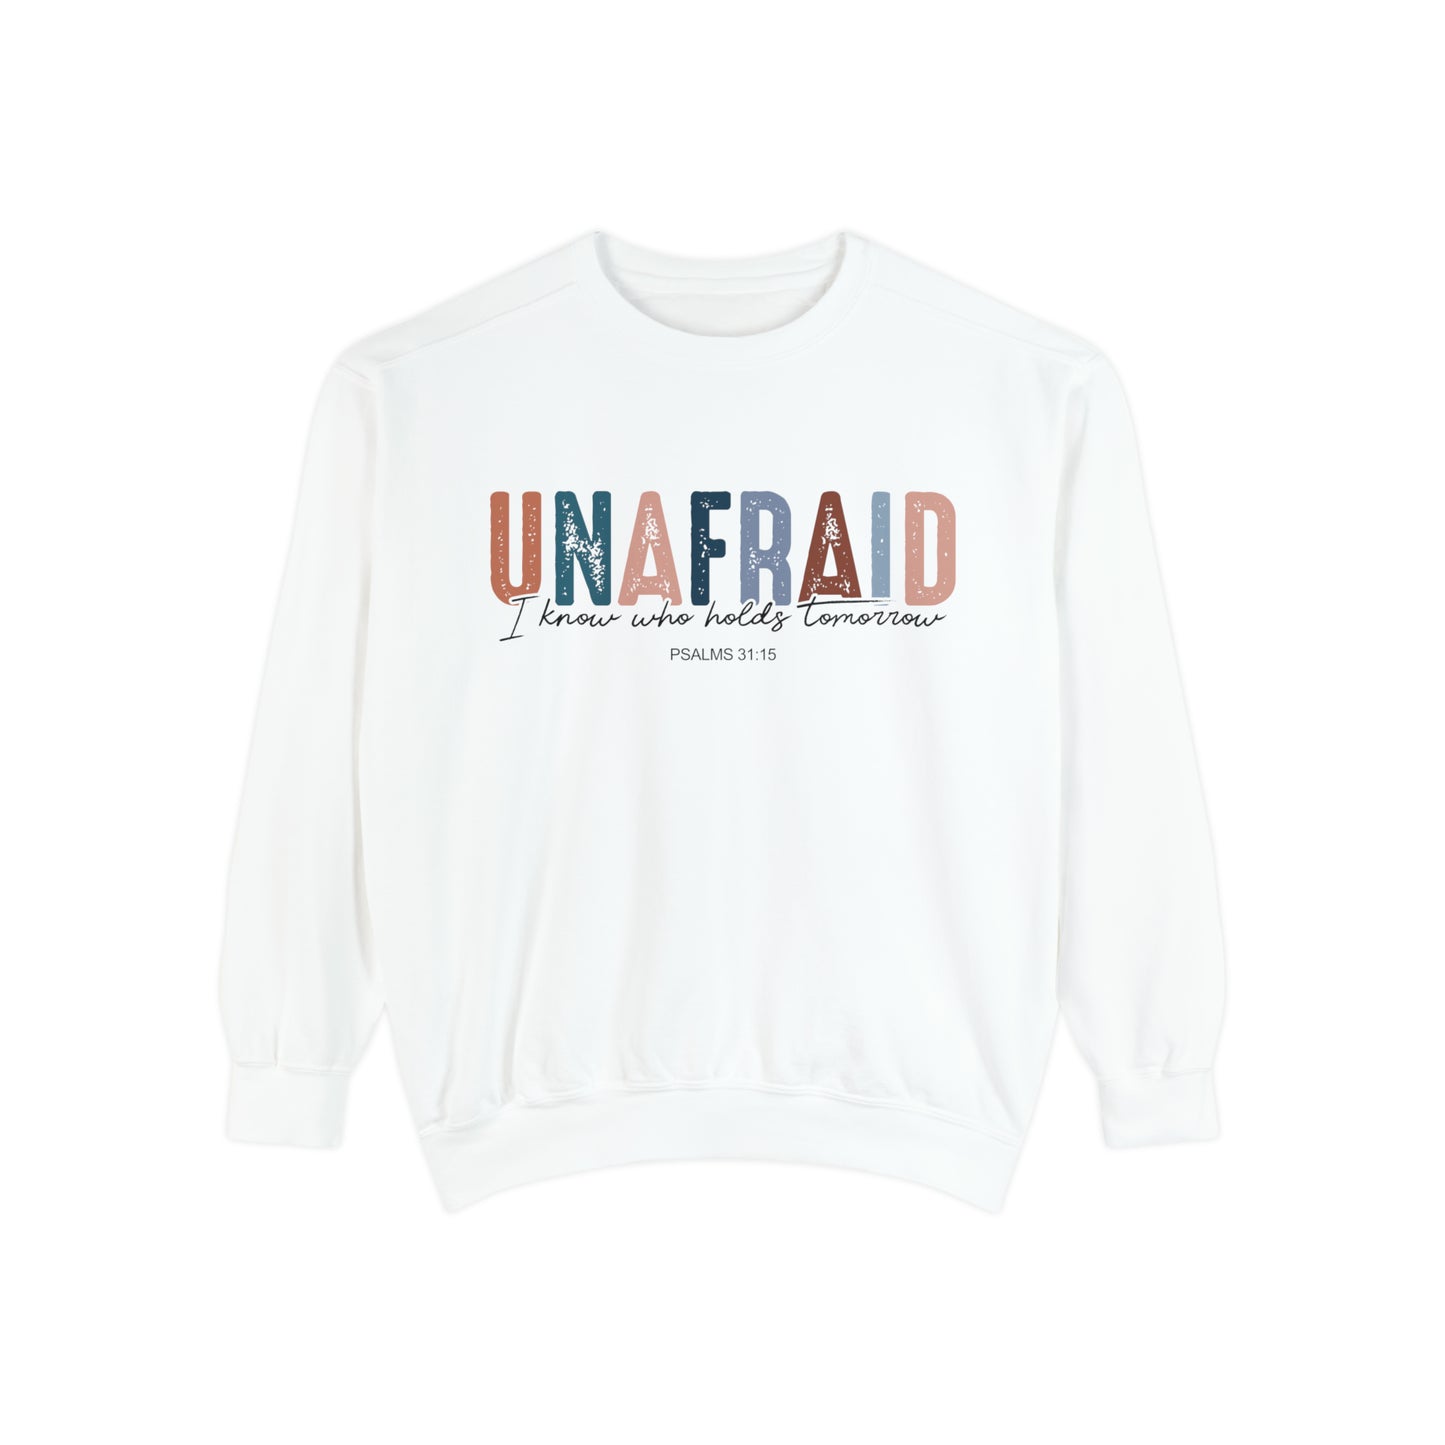 UNAFRAID Sweatshirt